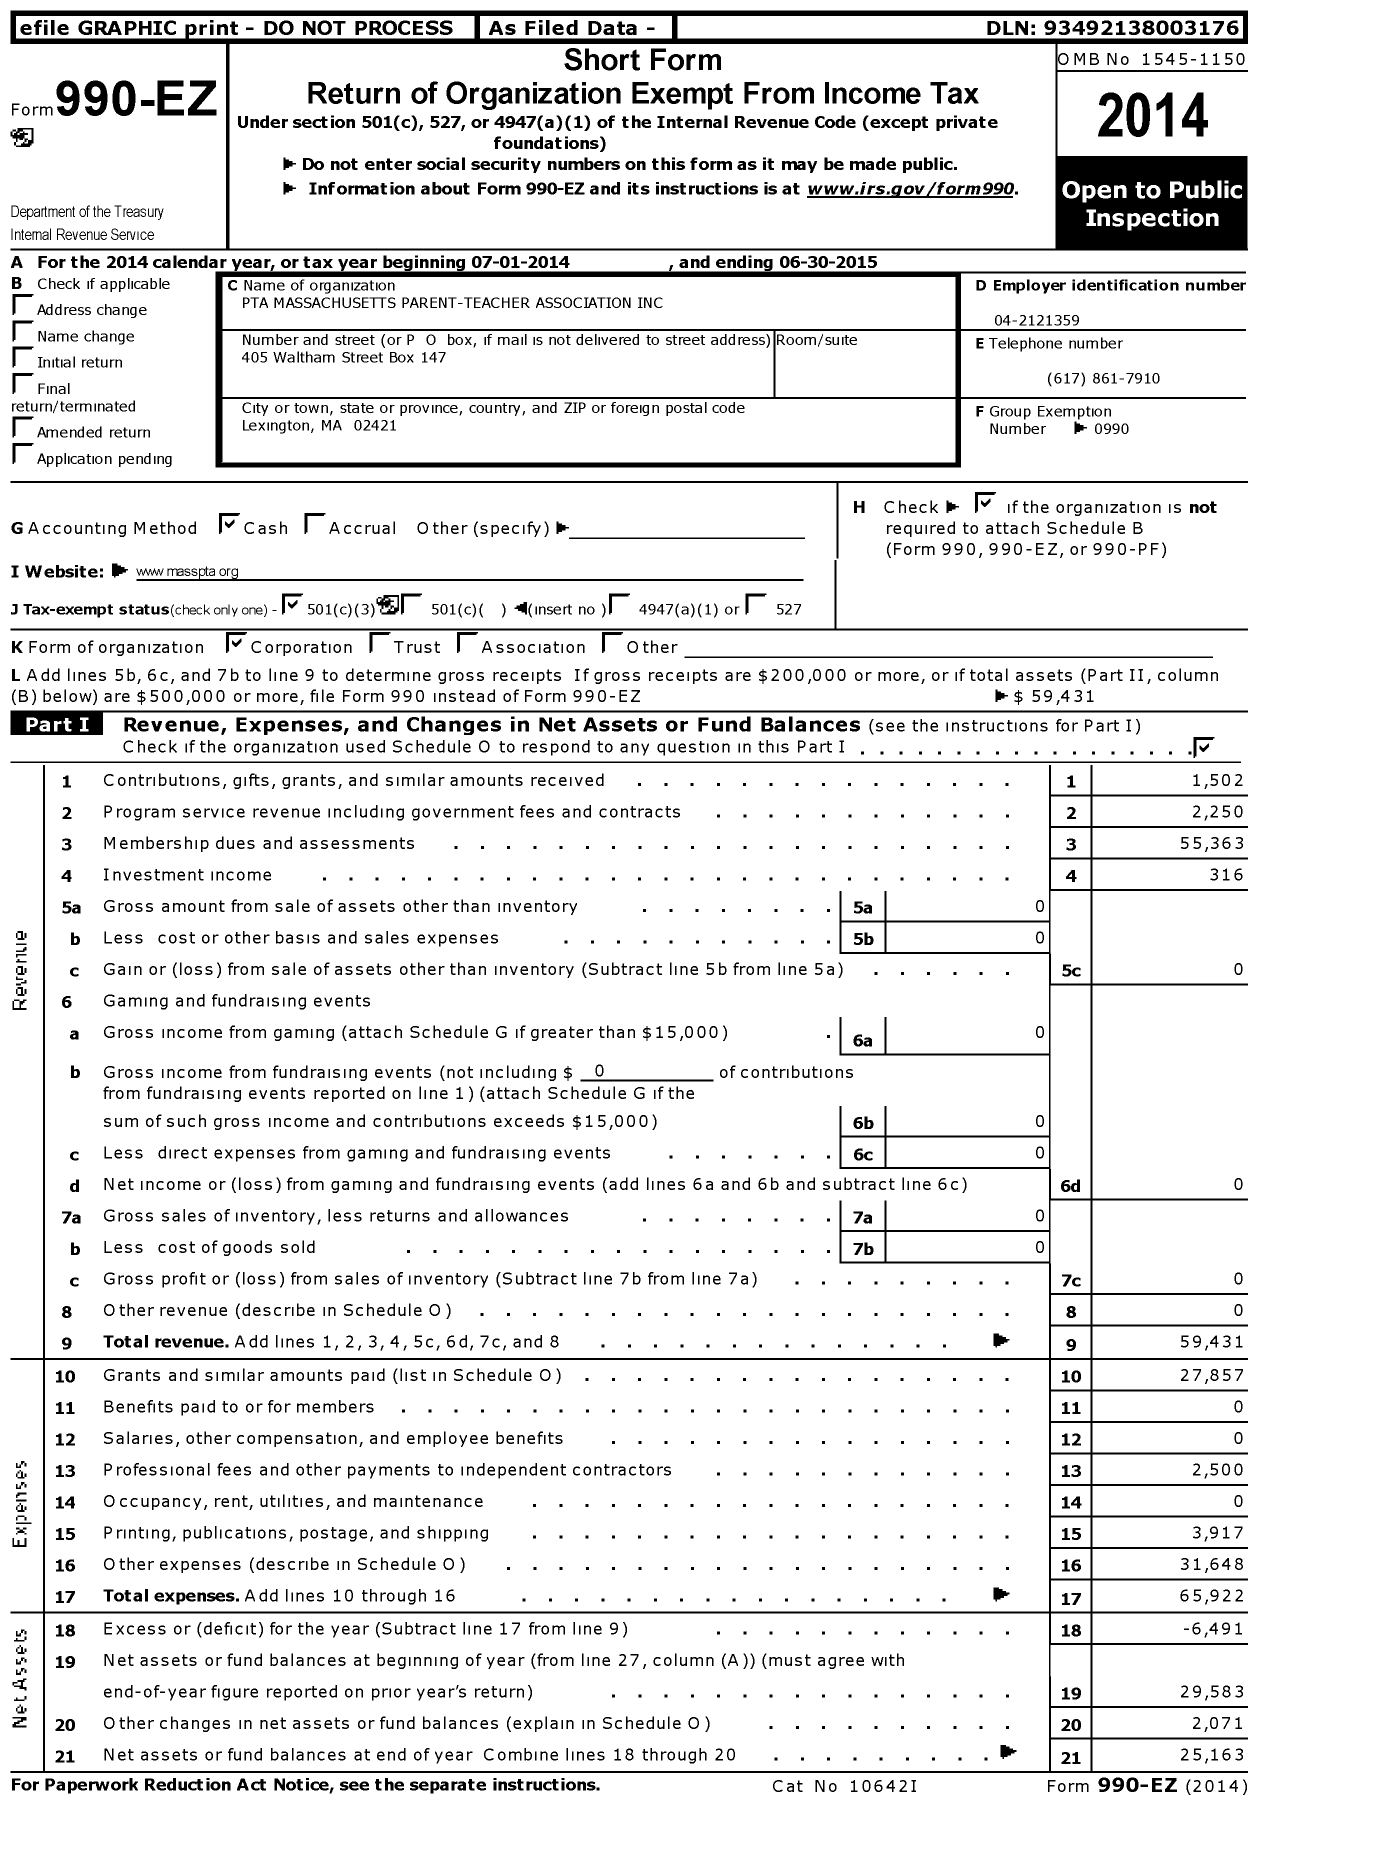 Image of first page of 2014 Form 990EZ for PTA Massachusetts Parent-Teacher Association